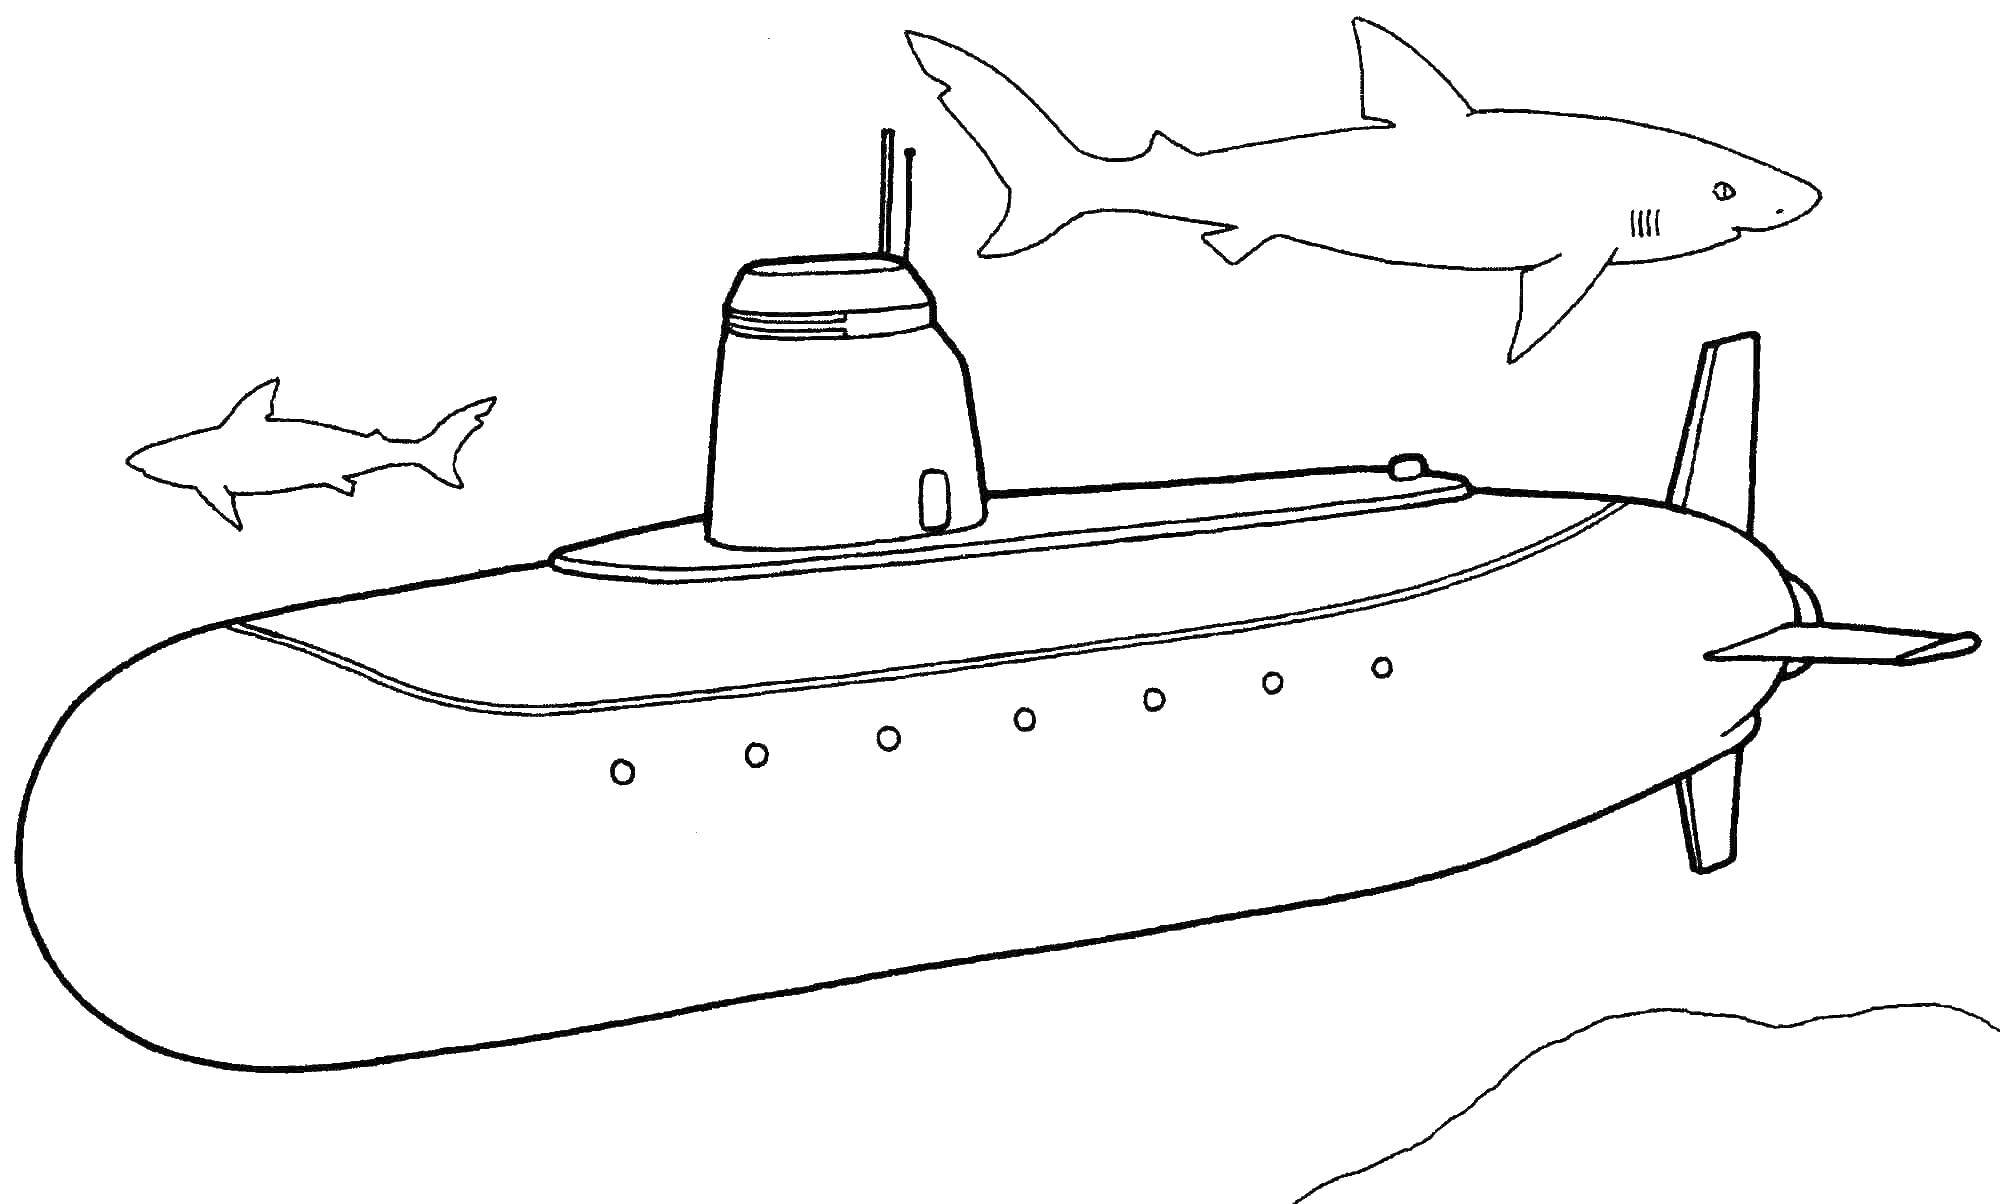 Название: Раскраска Подводная лодка и акулы. Категория: подводная лодка. Теги: подводная лодка, море, акулы.